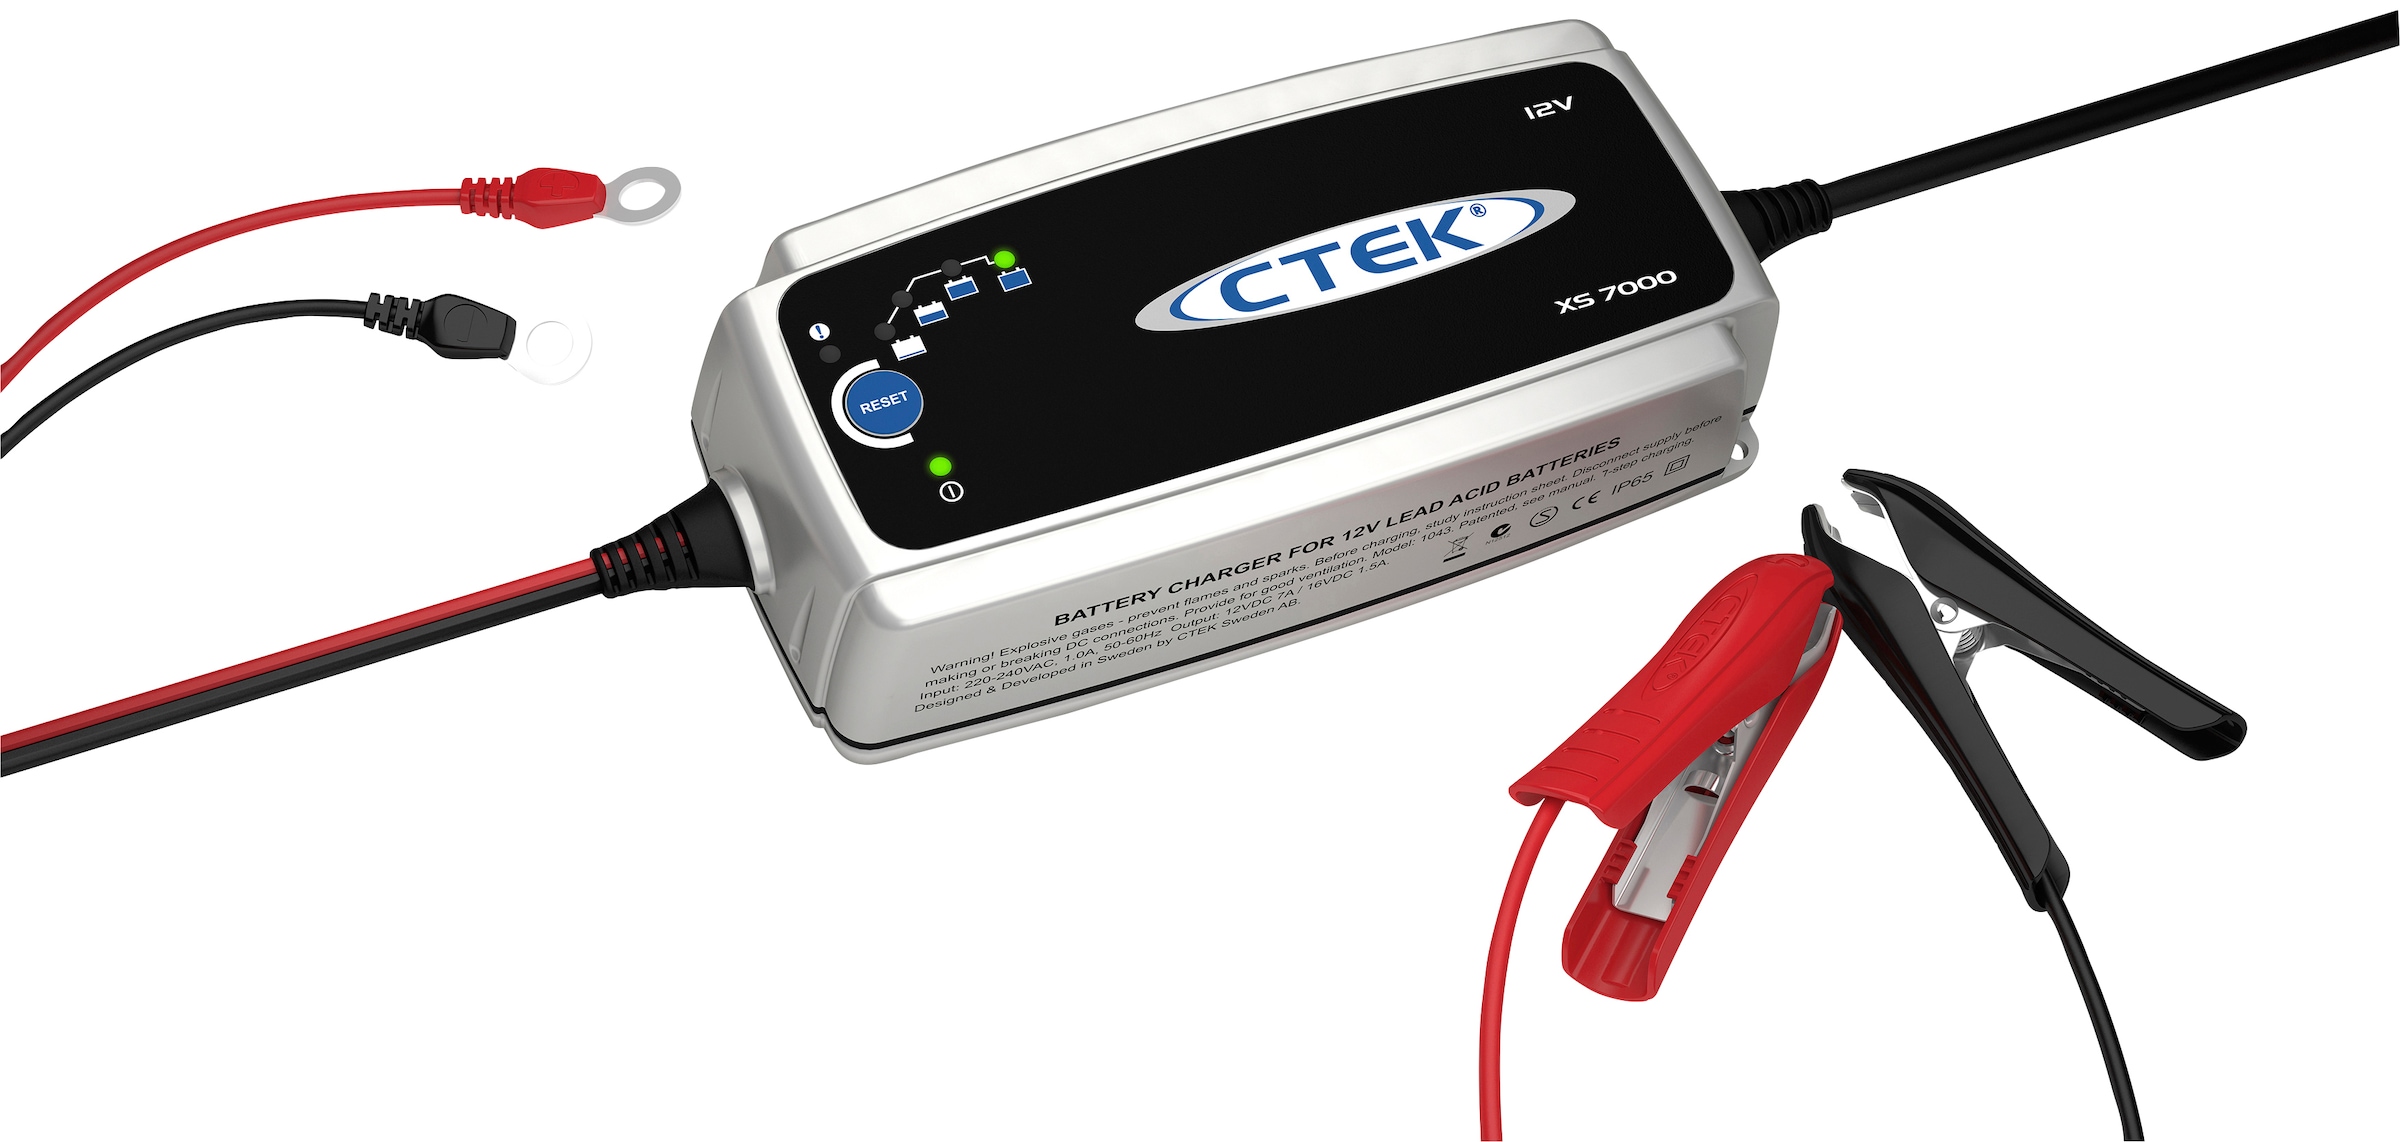 CTEK Batterie-Ladegerät »XS7000«, Patentierte Entsulfatierungsfunktion